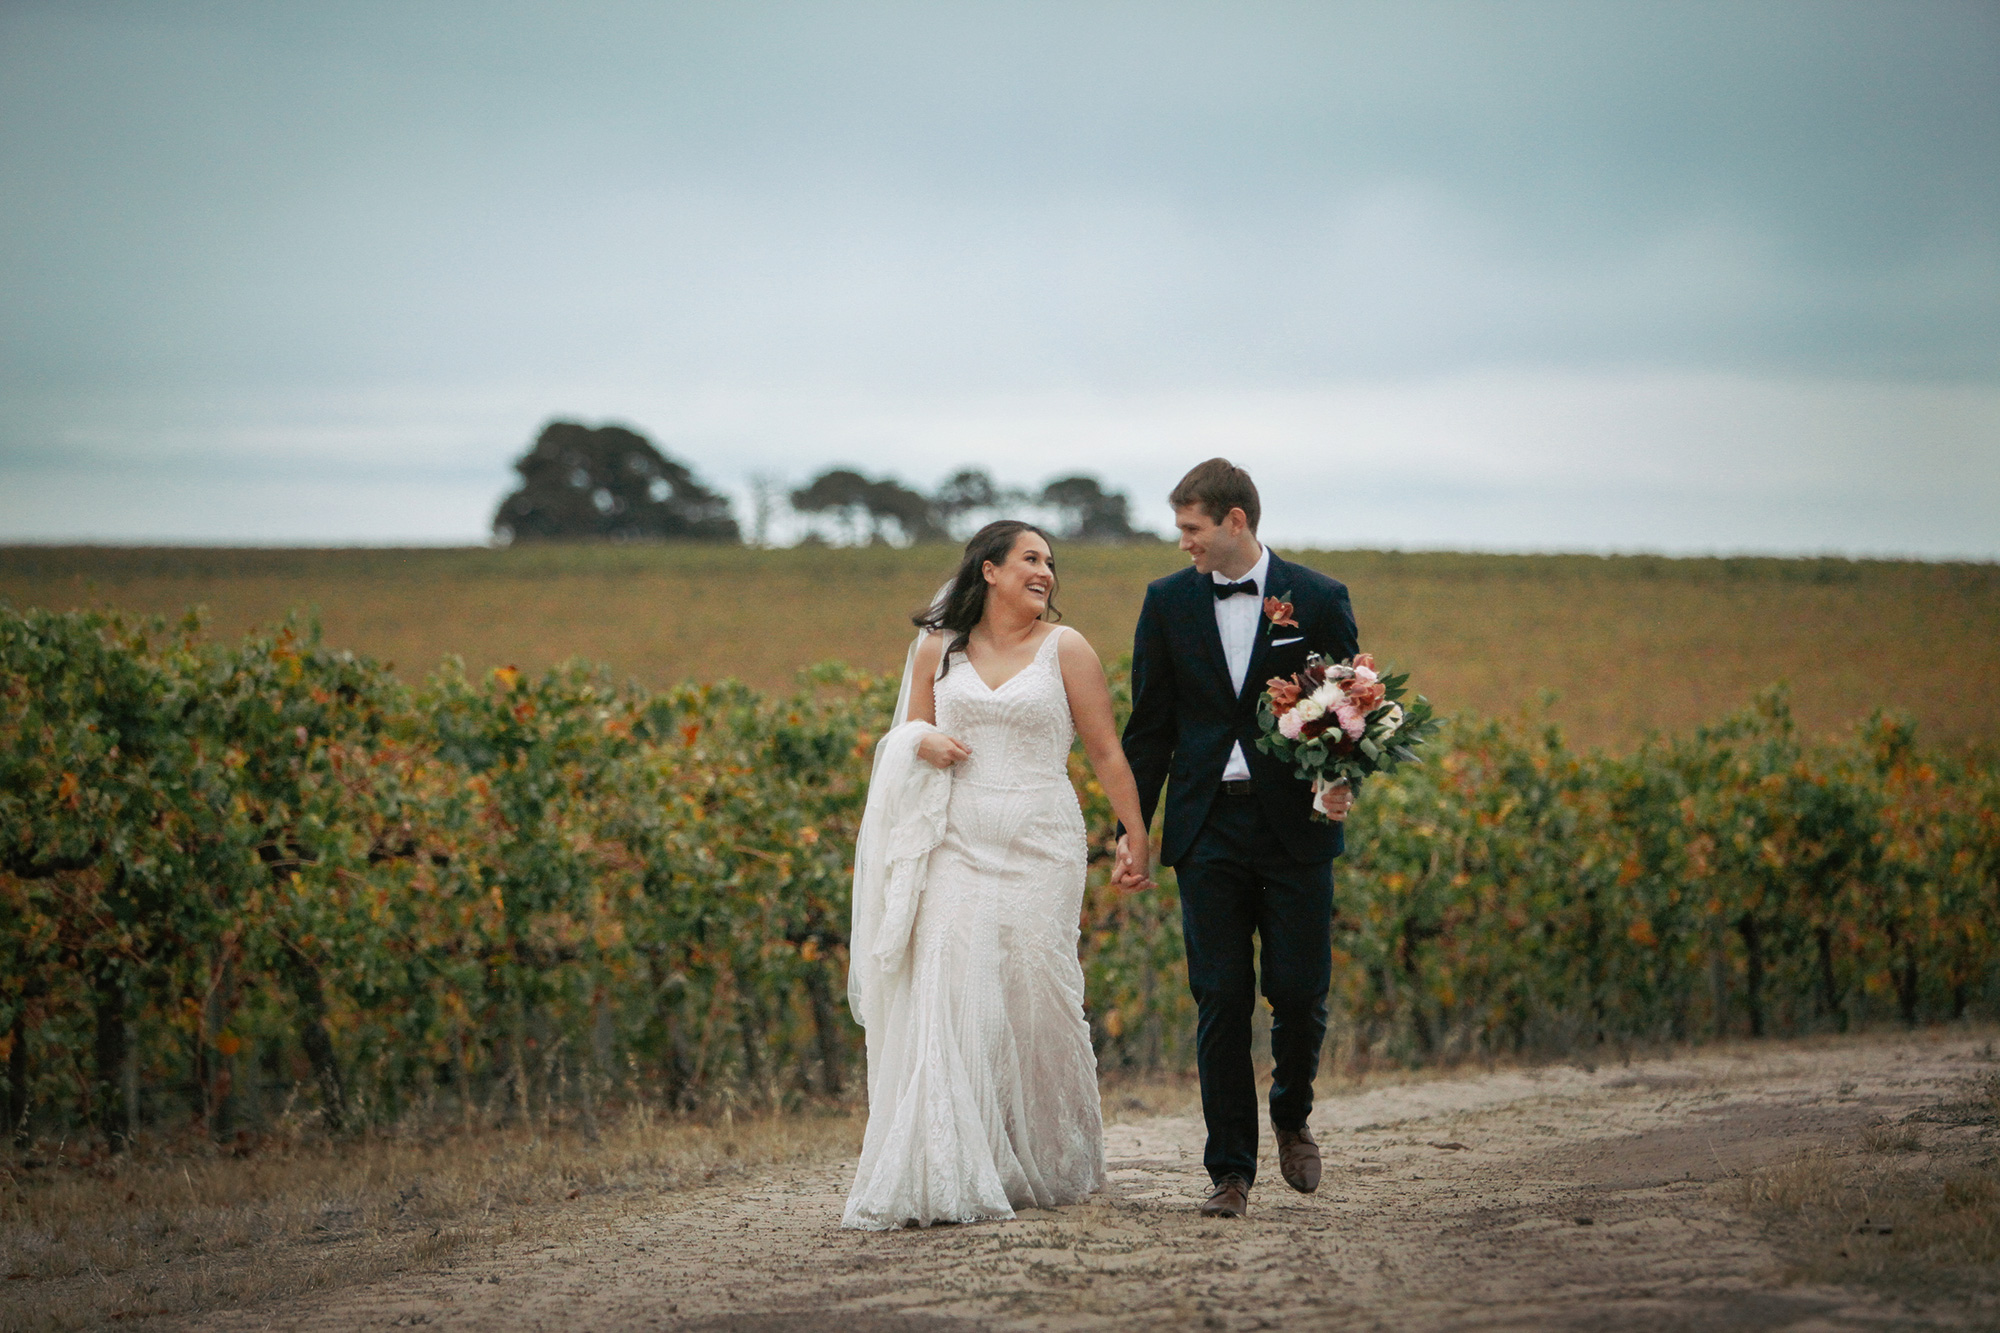 Kathryn Zyggy Rustic Winery Wedding Panache Photography 040